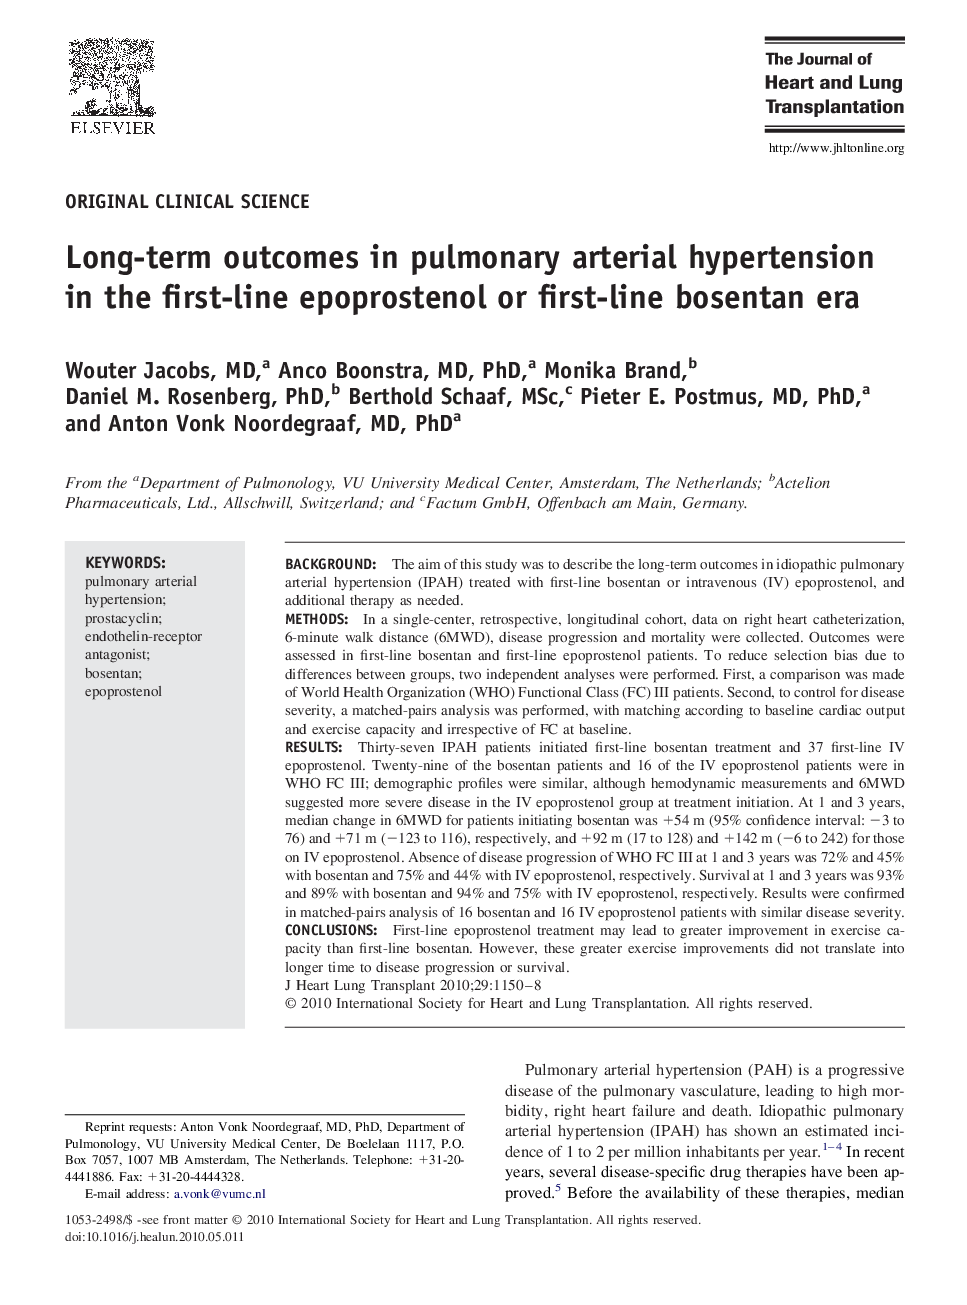 Long-term outcomes in pulmonary arterial hypertension in the first-line epoprostenol or first-line bosentan era